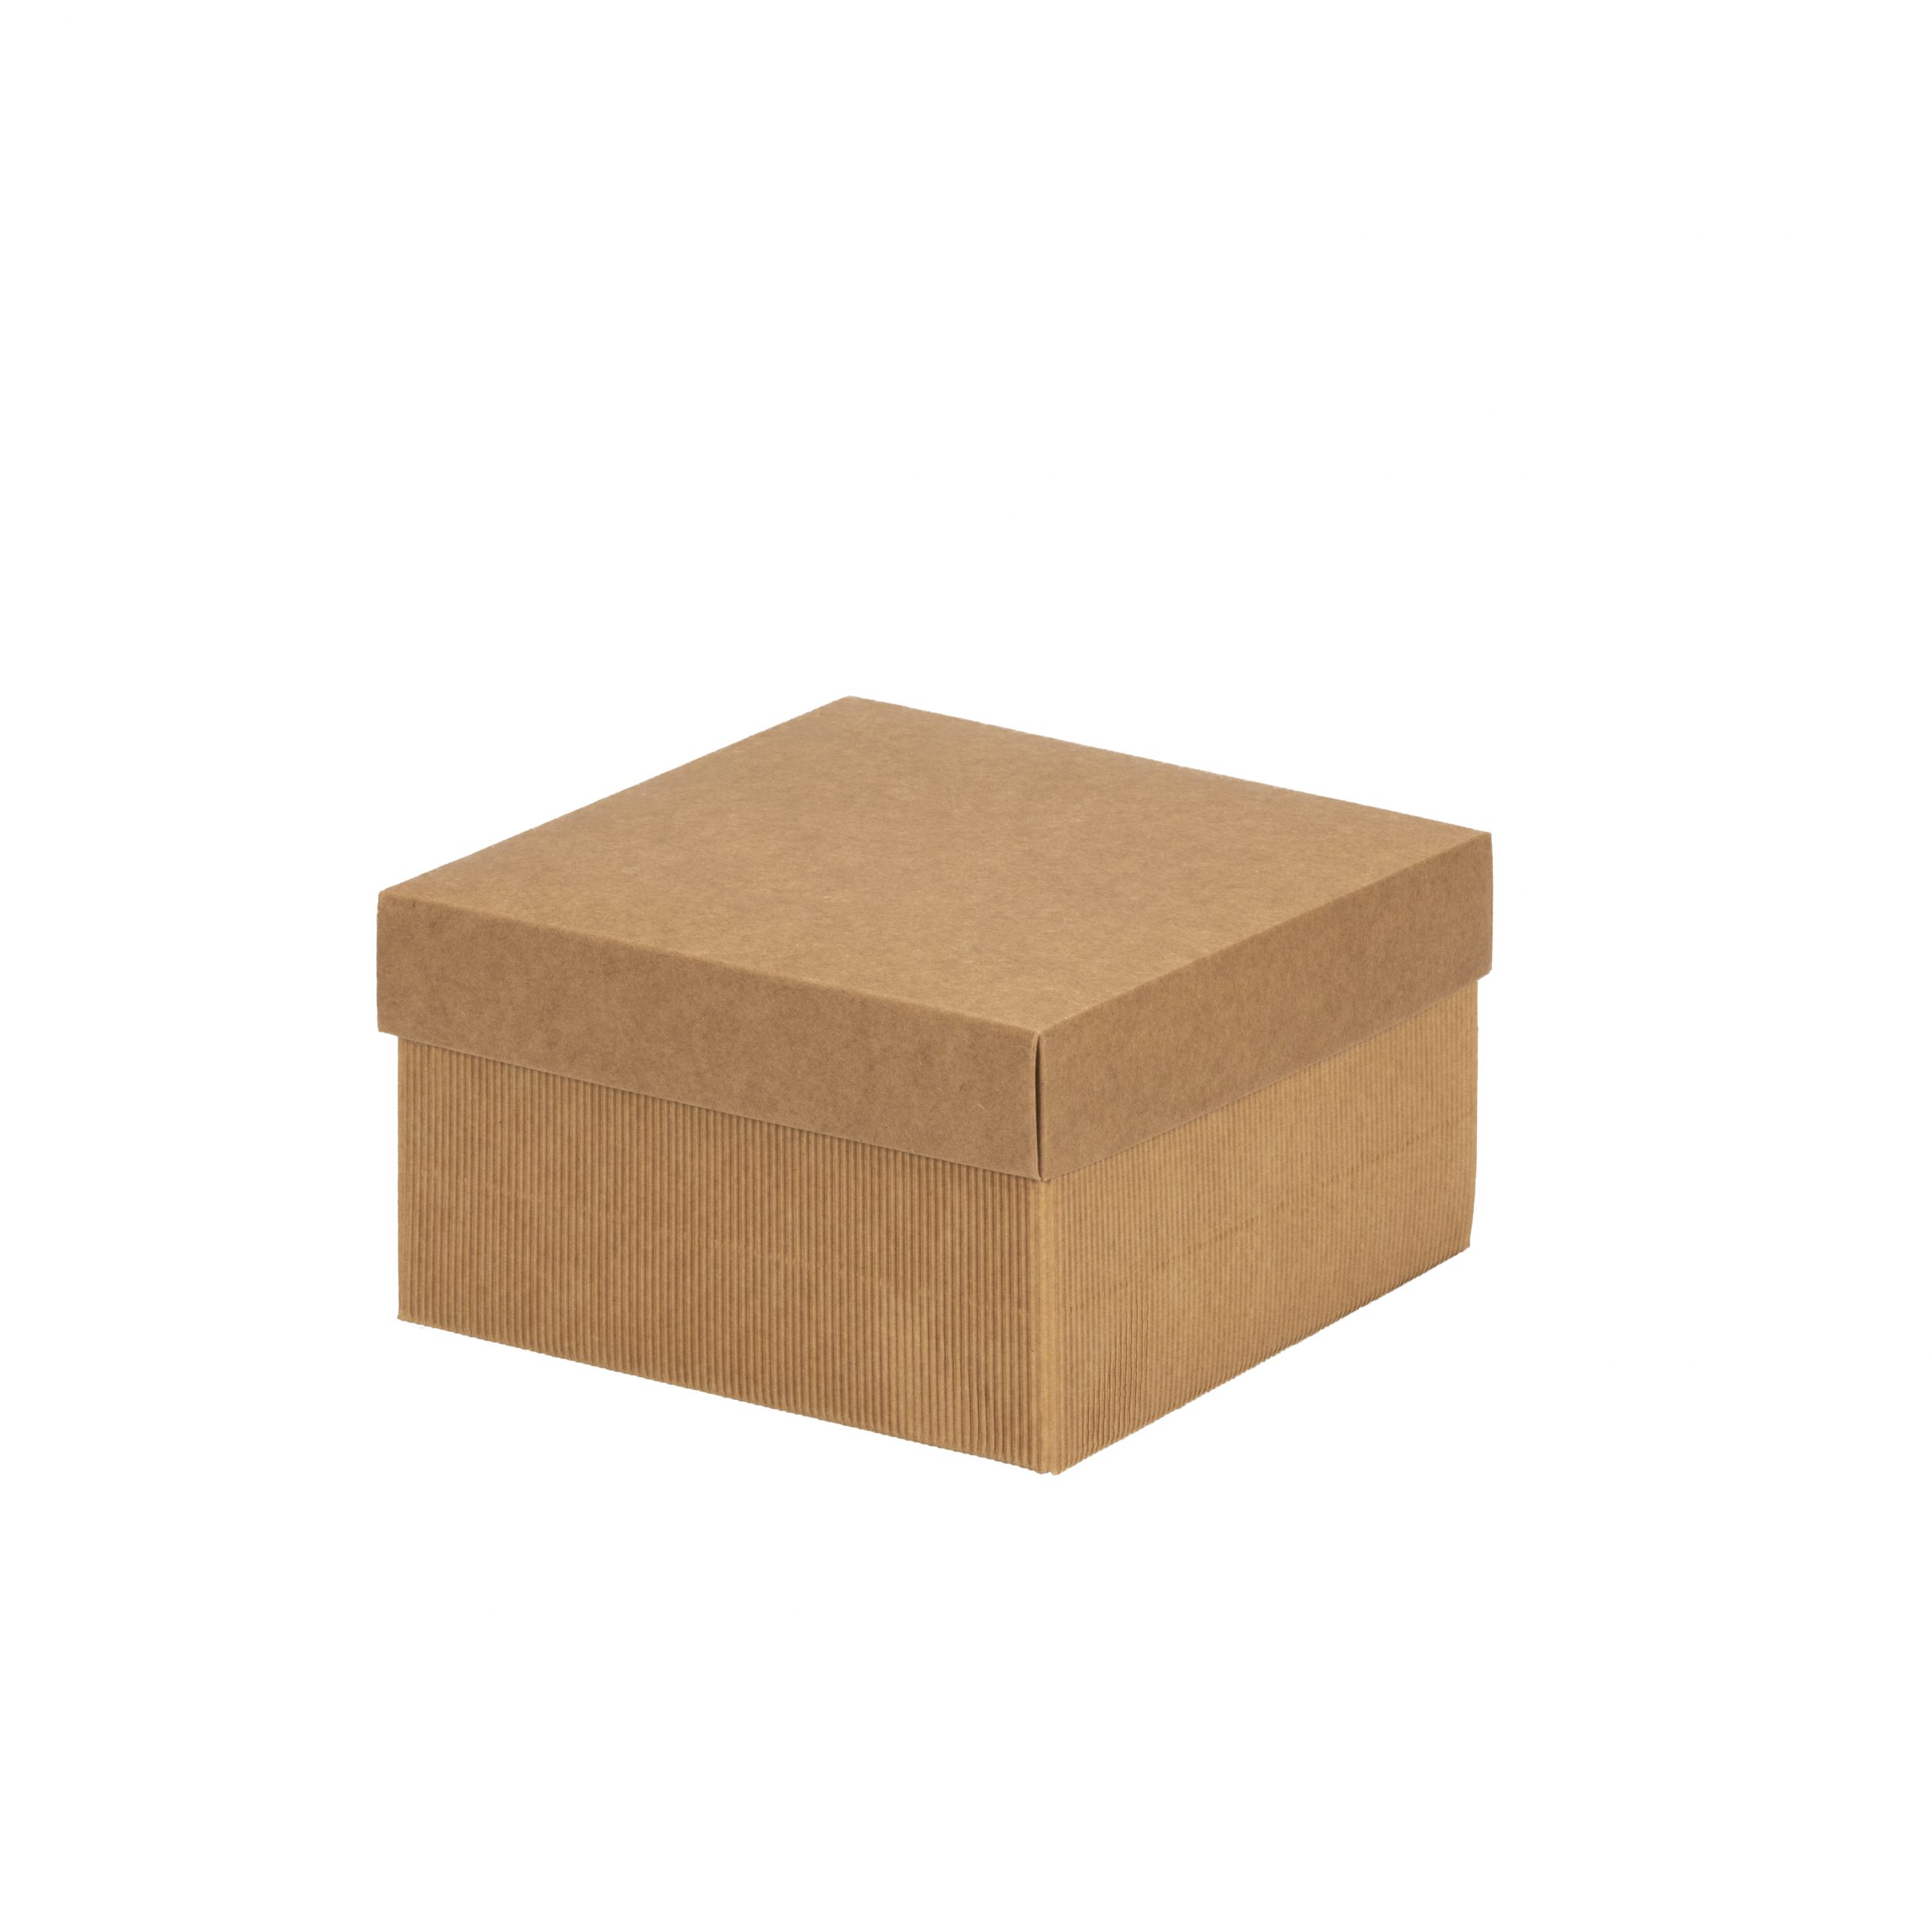 Giftbox c/w Lid – 200 x 200 x 110mm